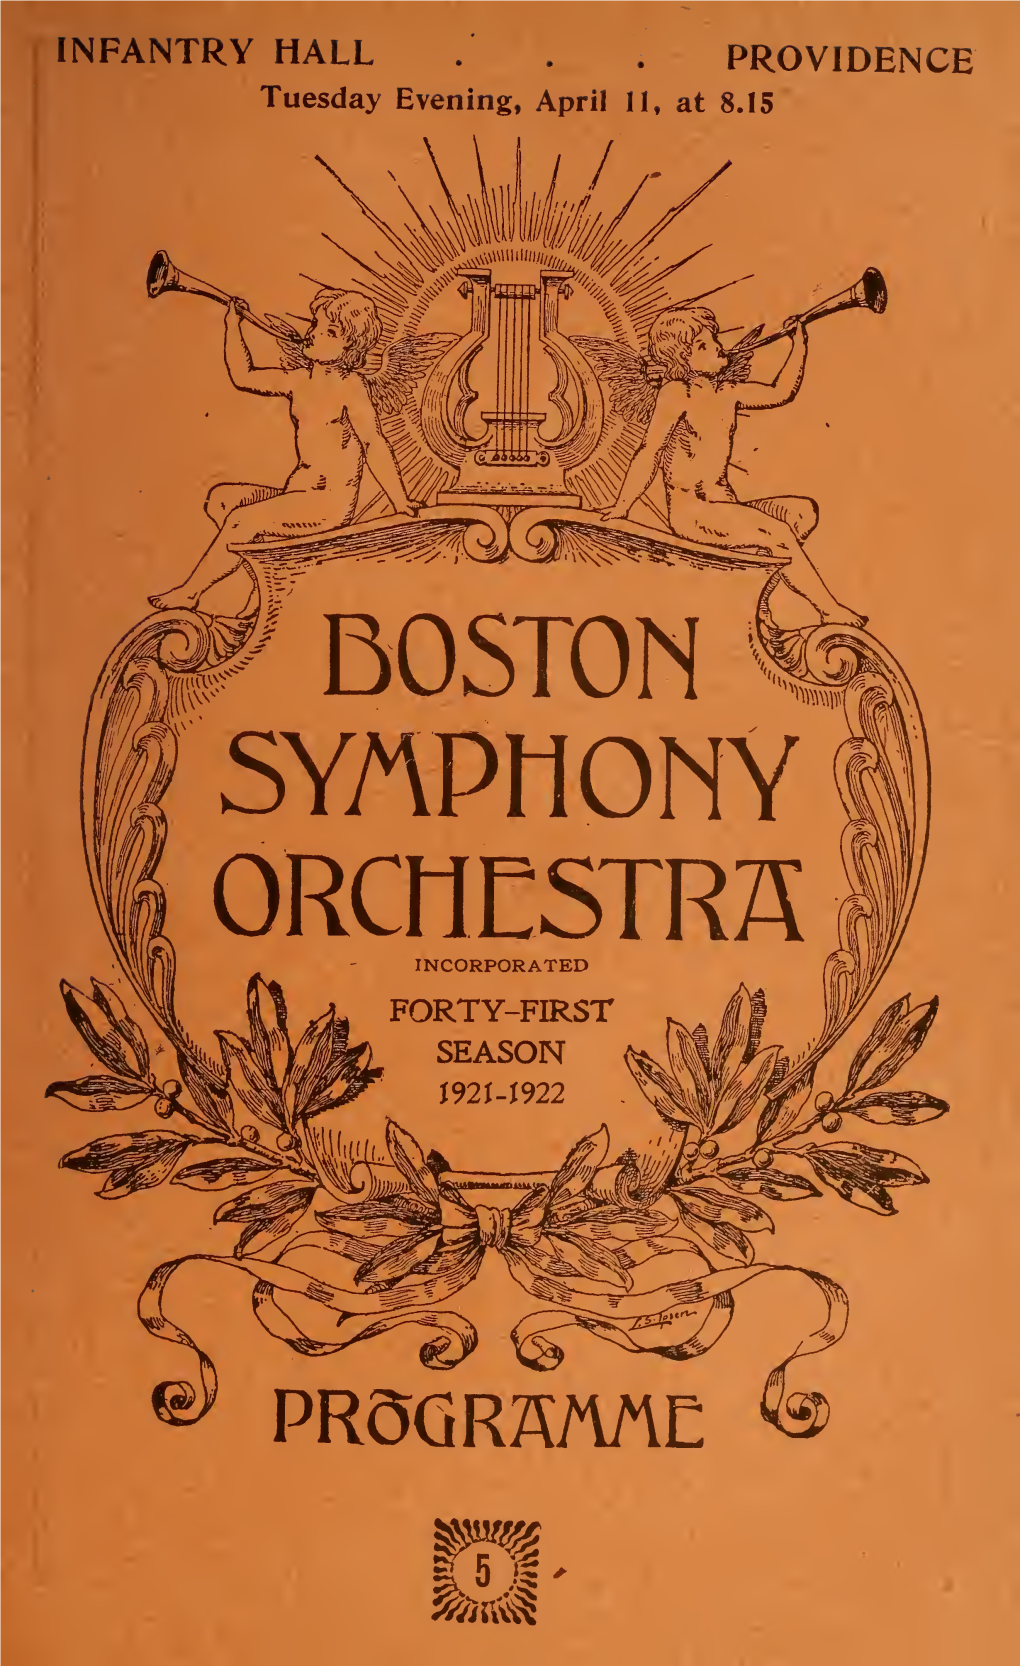 Boston Symphony Orchestra Concert Programs, Season 41,1921-1922, Trip